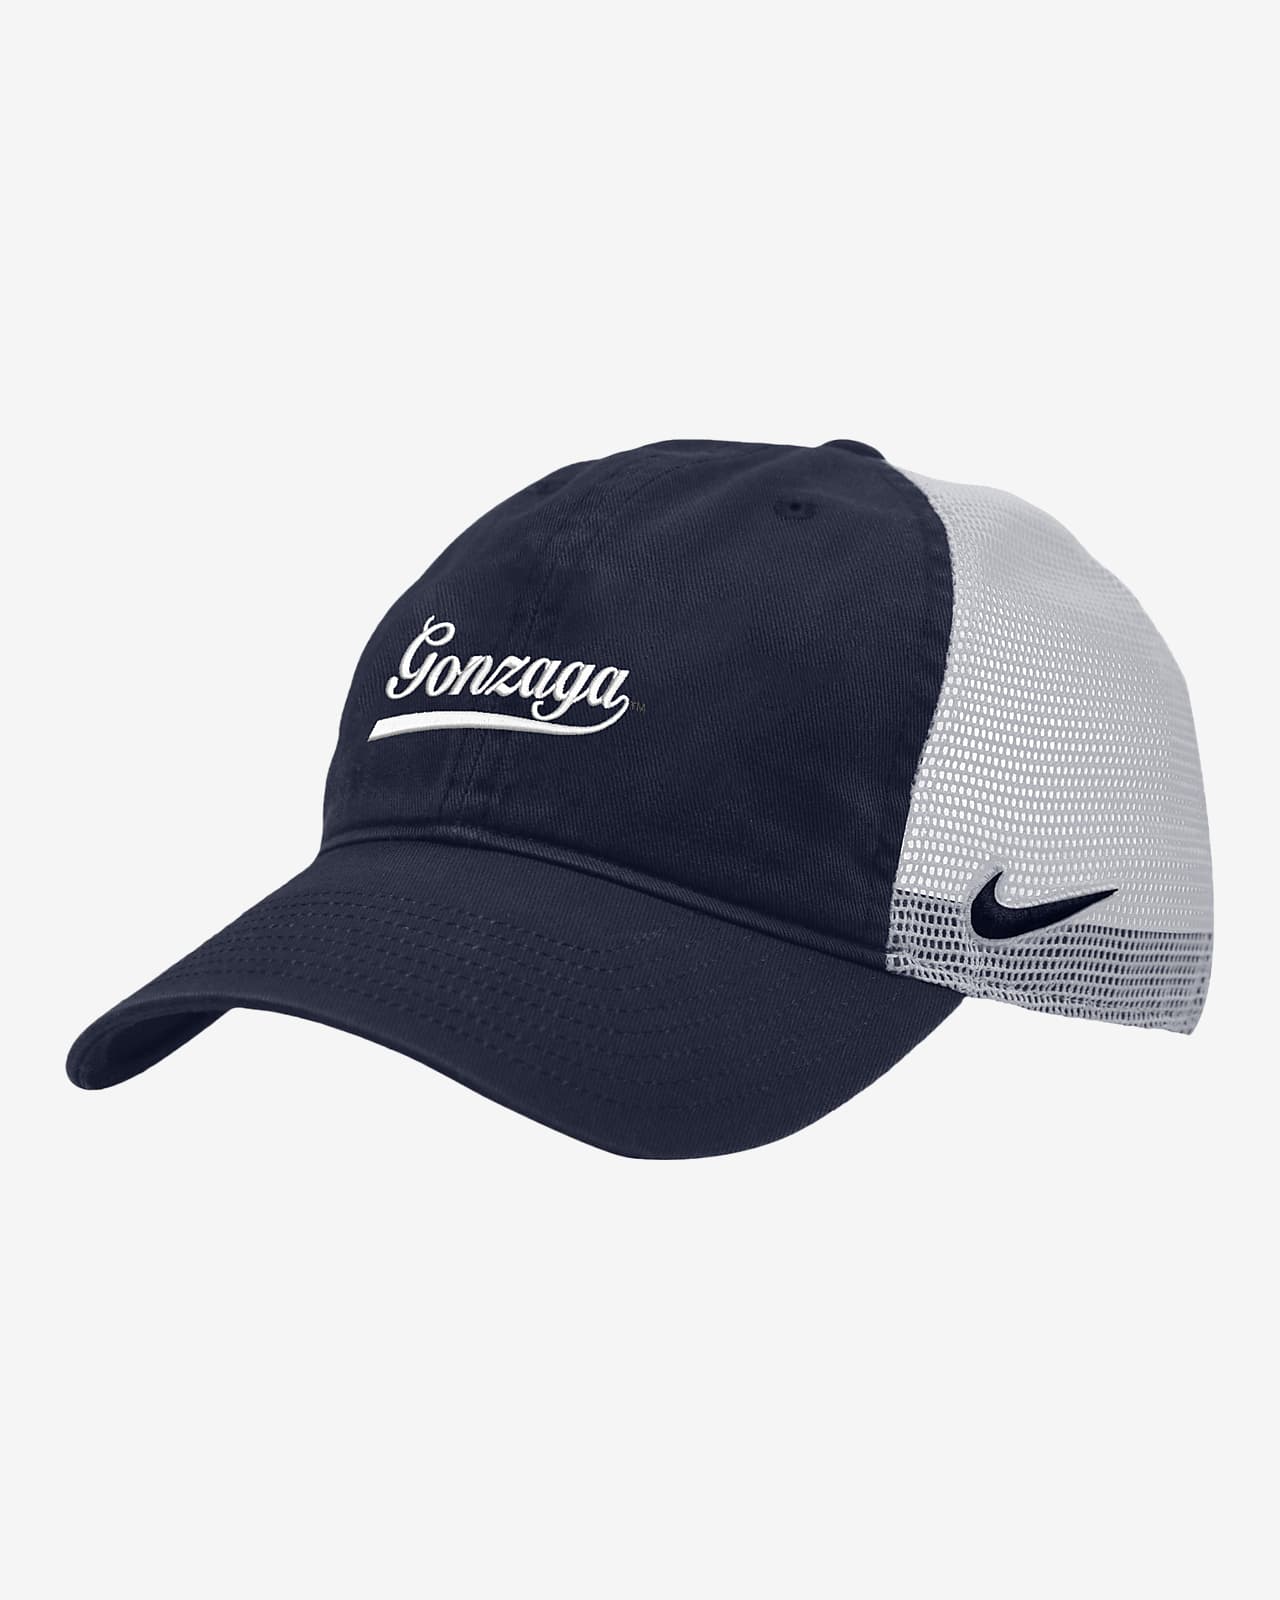 Gonzaga Heritage86 Nike College Trucker Hat